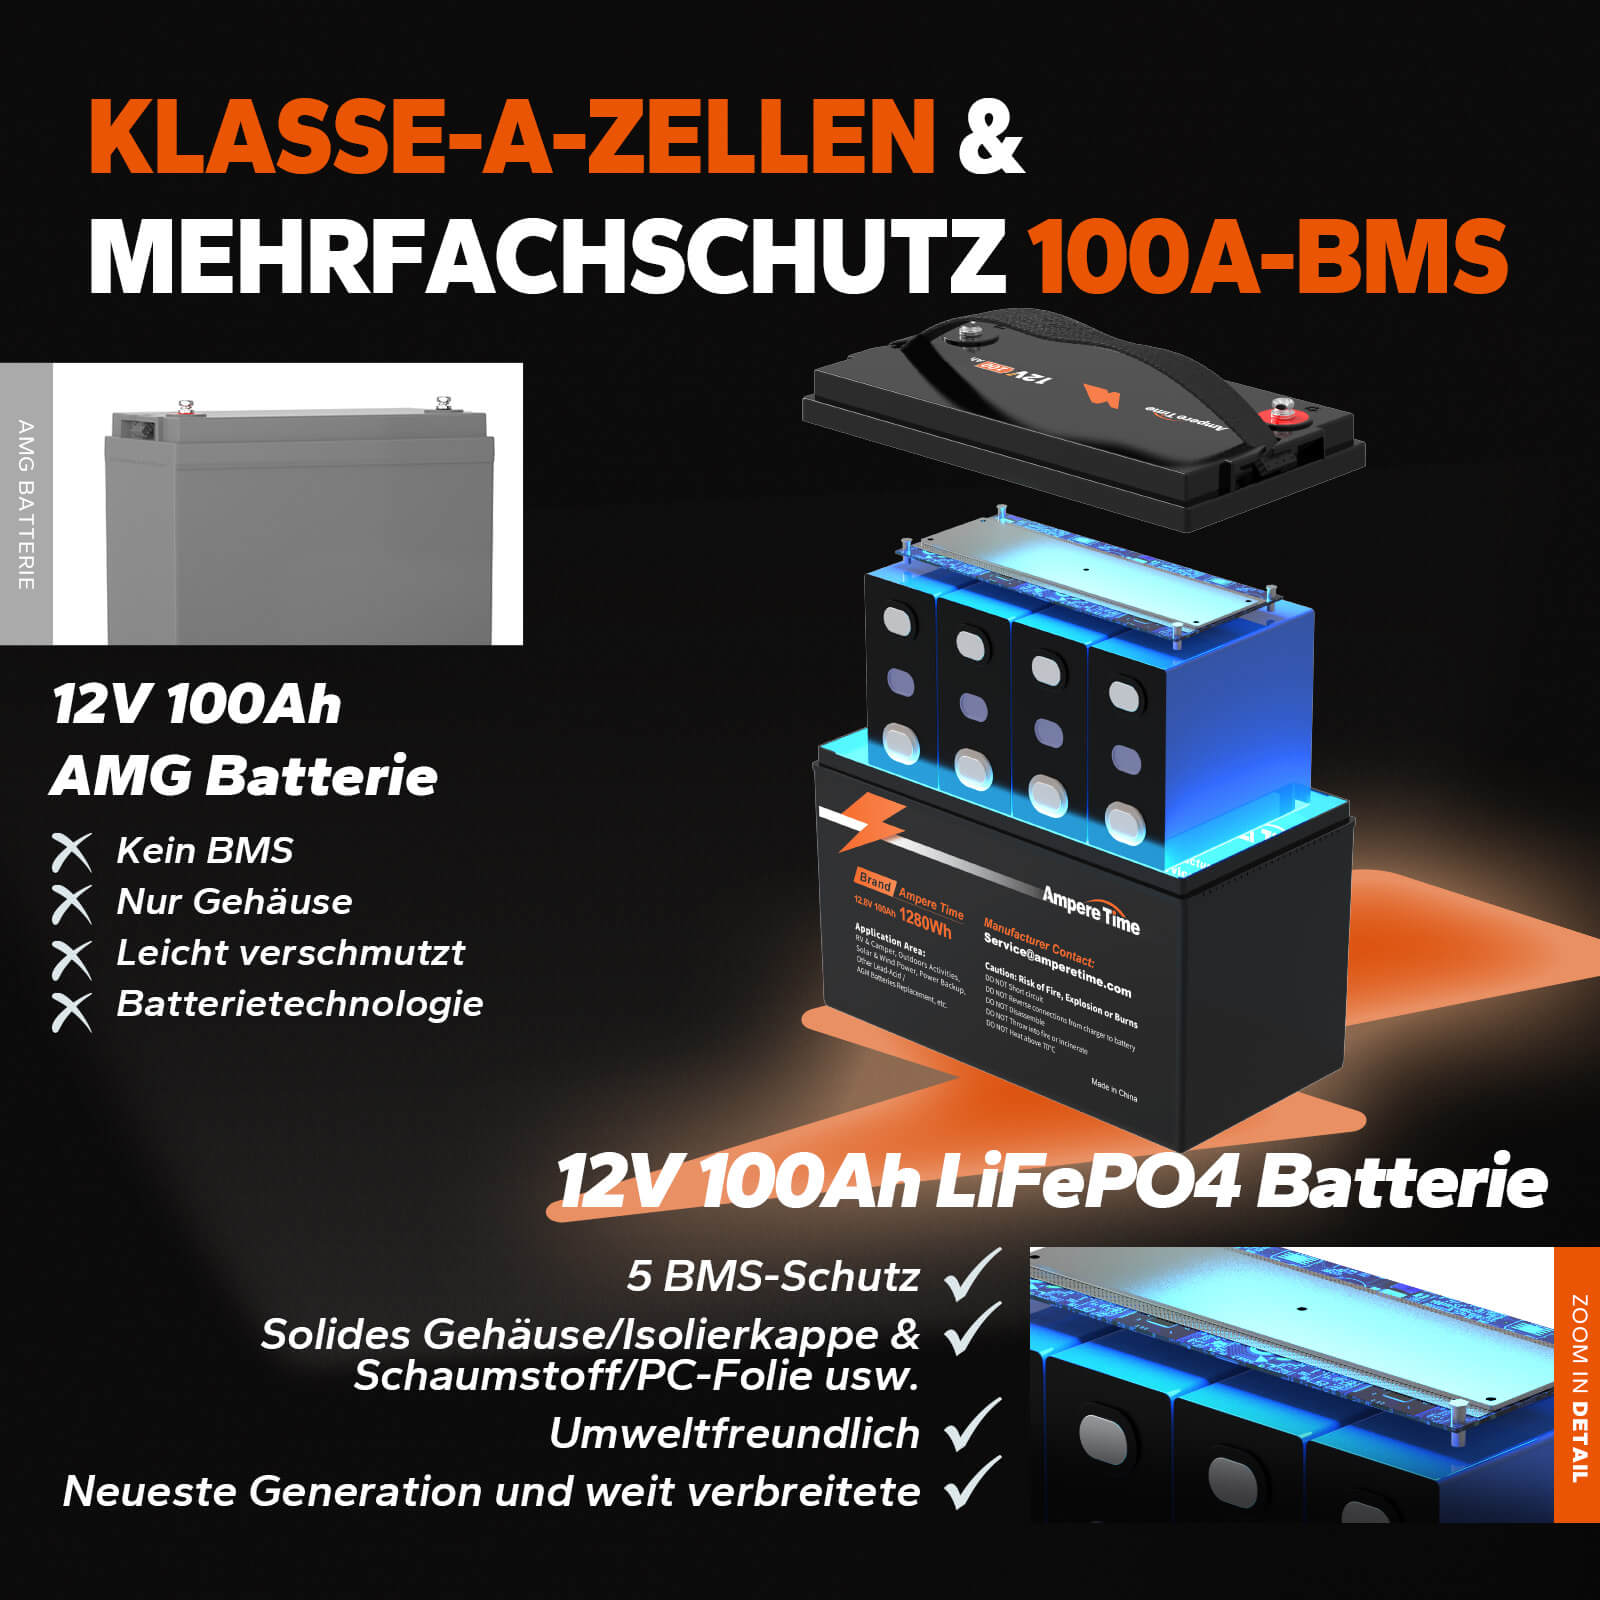 Ampere Time 12V 100Ah LiFePO4 Lithium Batterie, Perfekter Ersatz für die agm batterie Amperetime DE